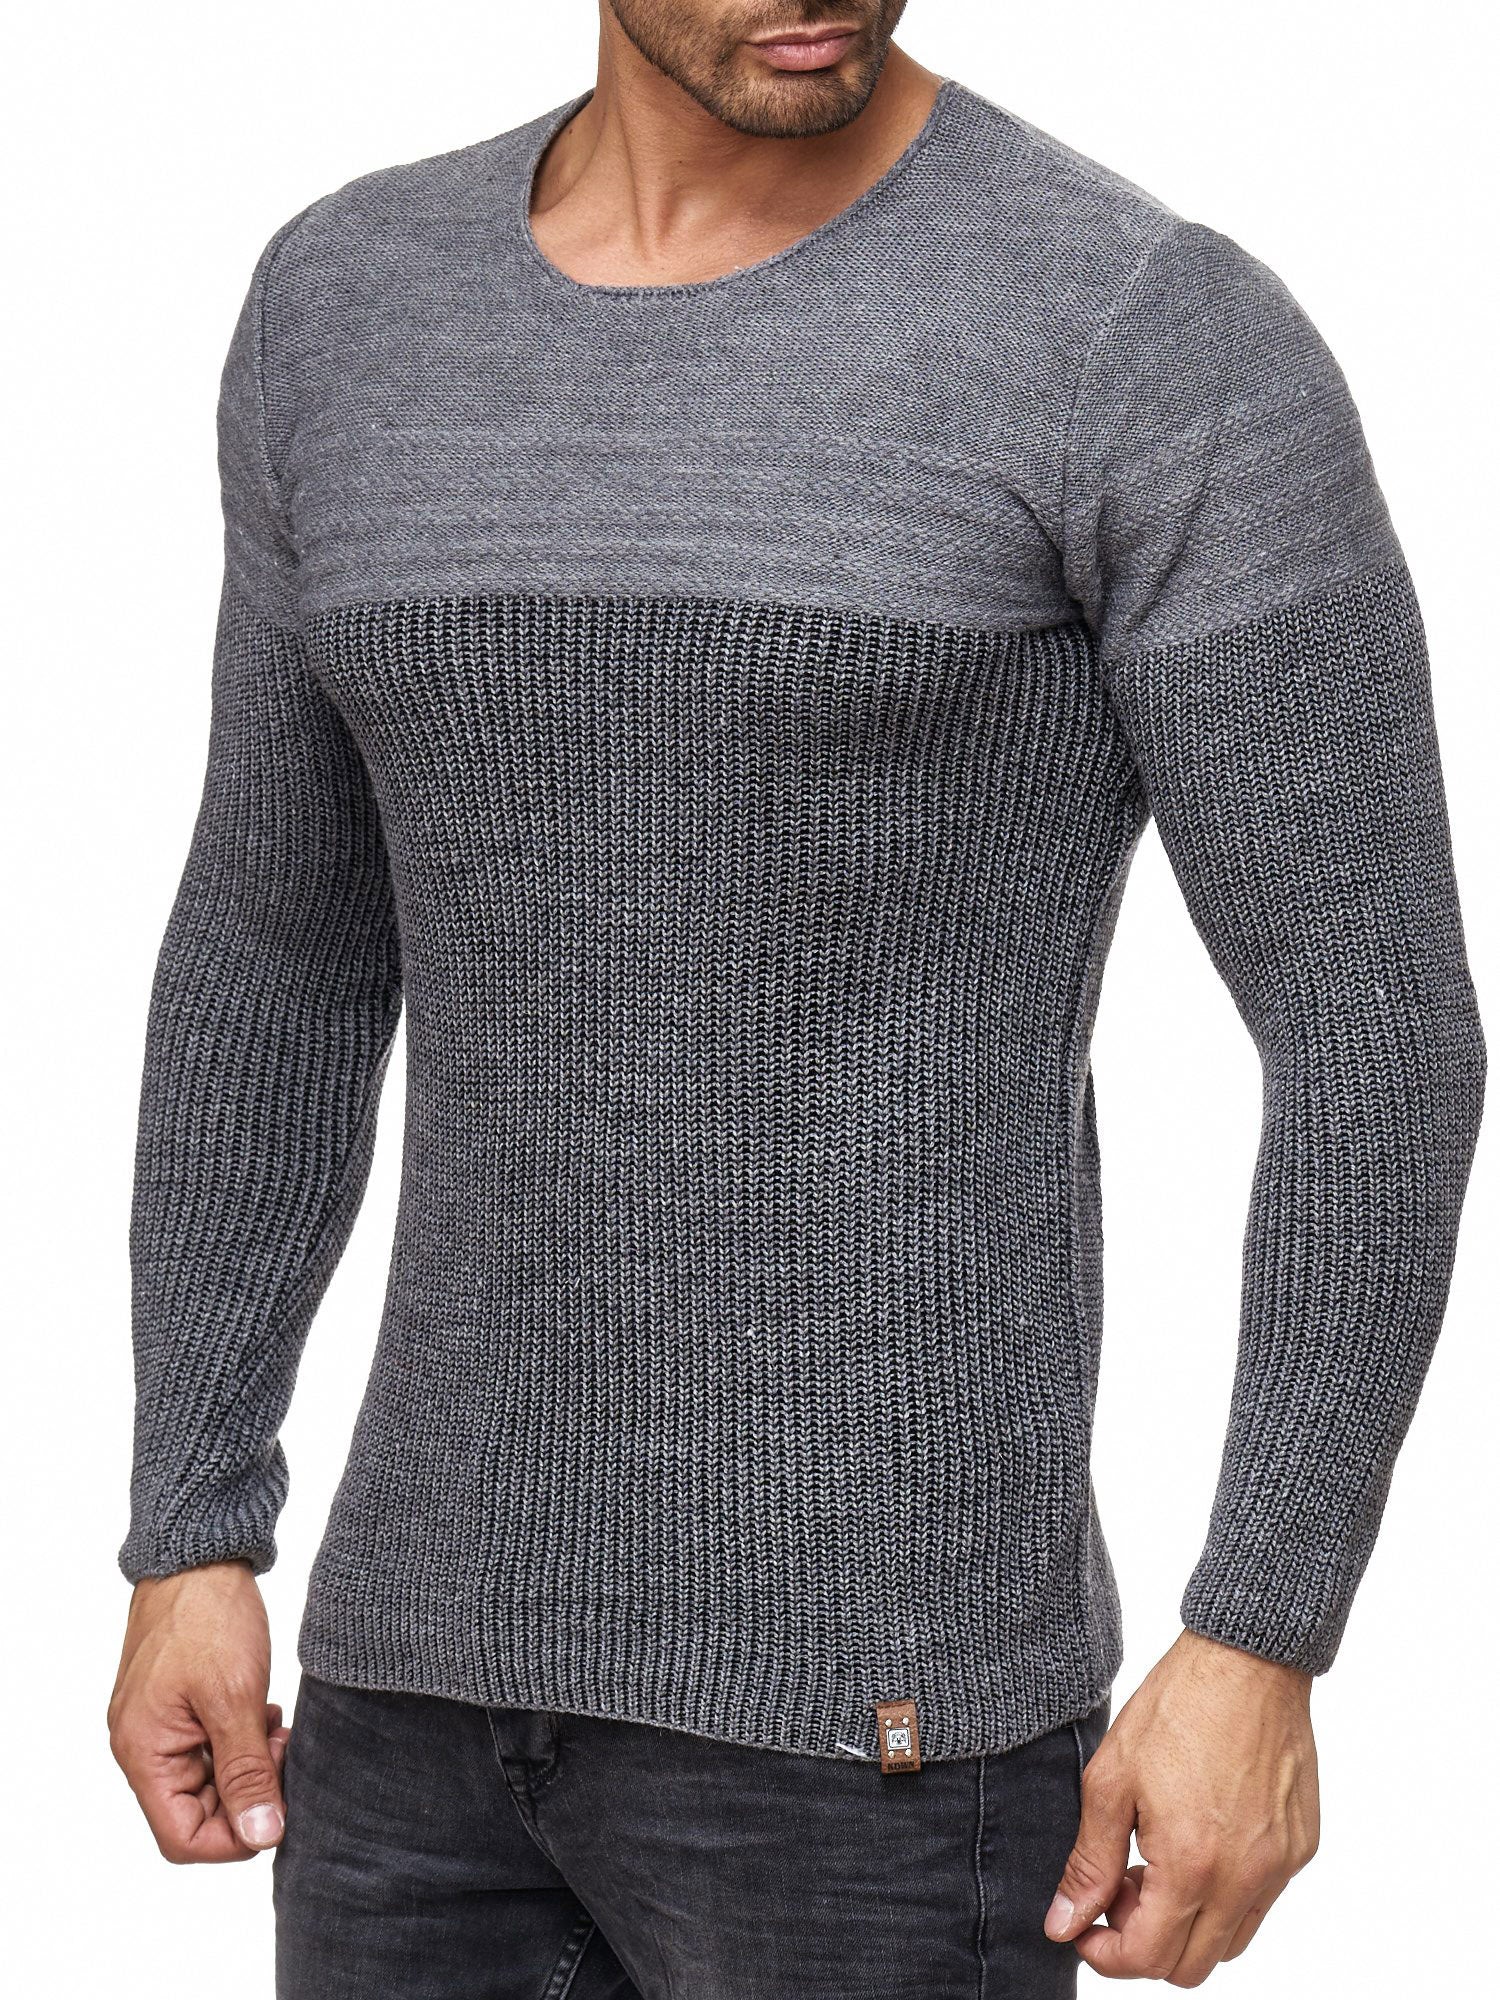 K&D Men Stylish 2 Tone Crew Neck Simple Sweater - Gray - FASH STOP